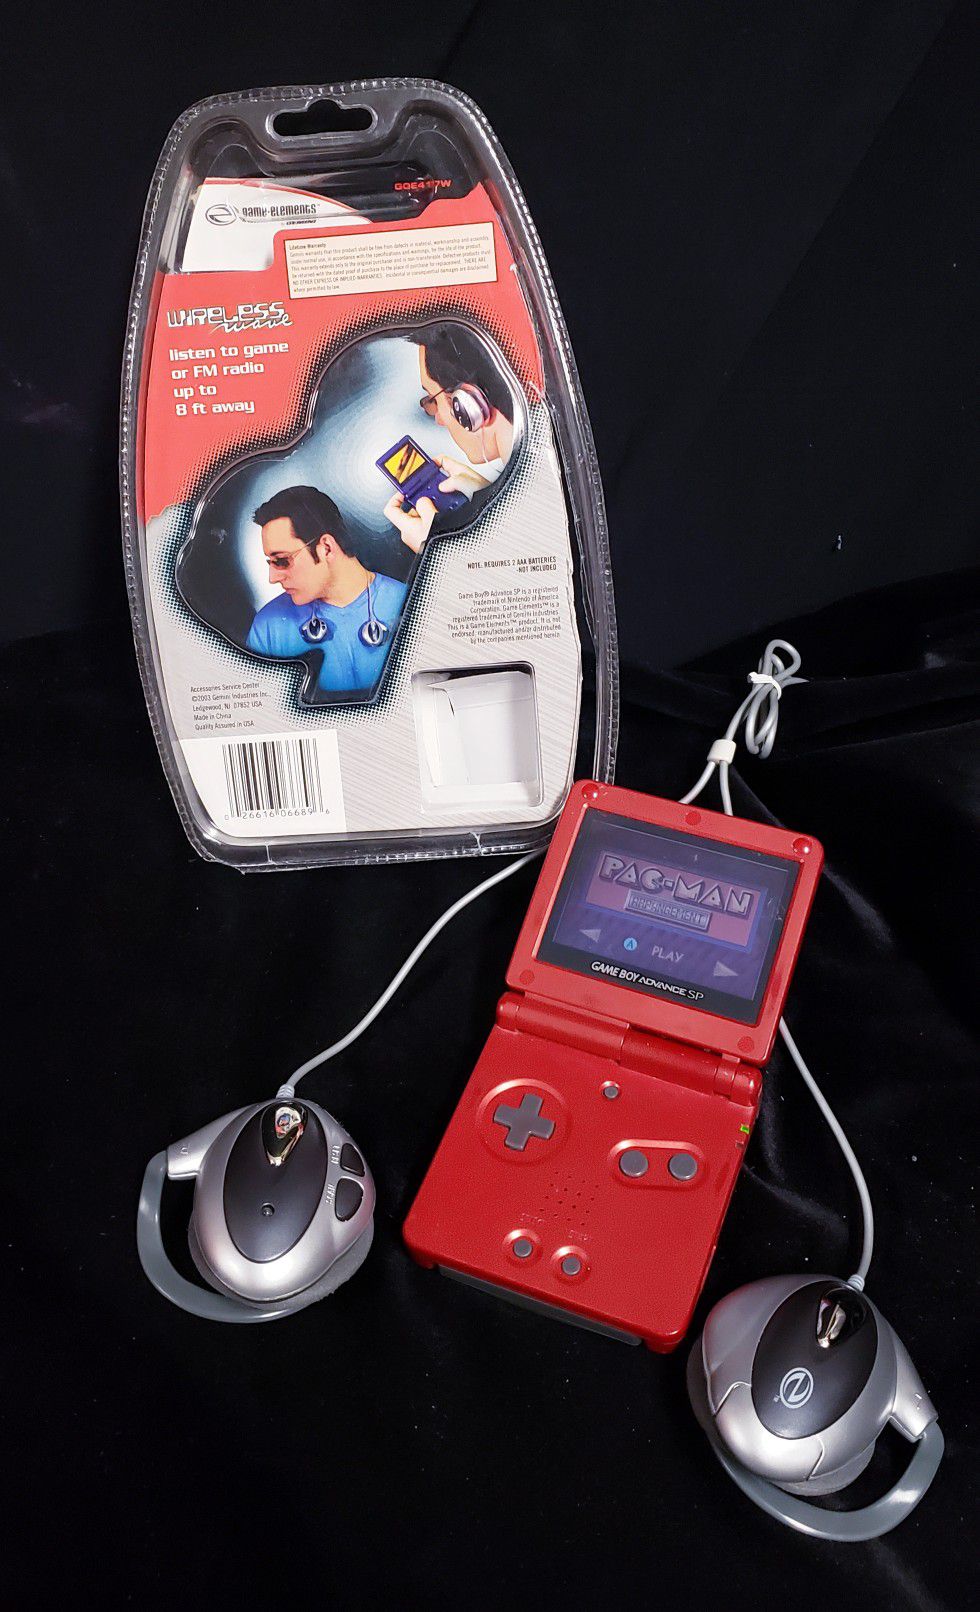 Flame Gameboy Advance SP w/Wireless Headphones